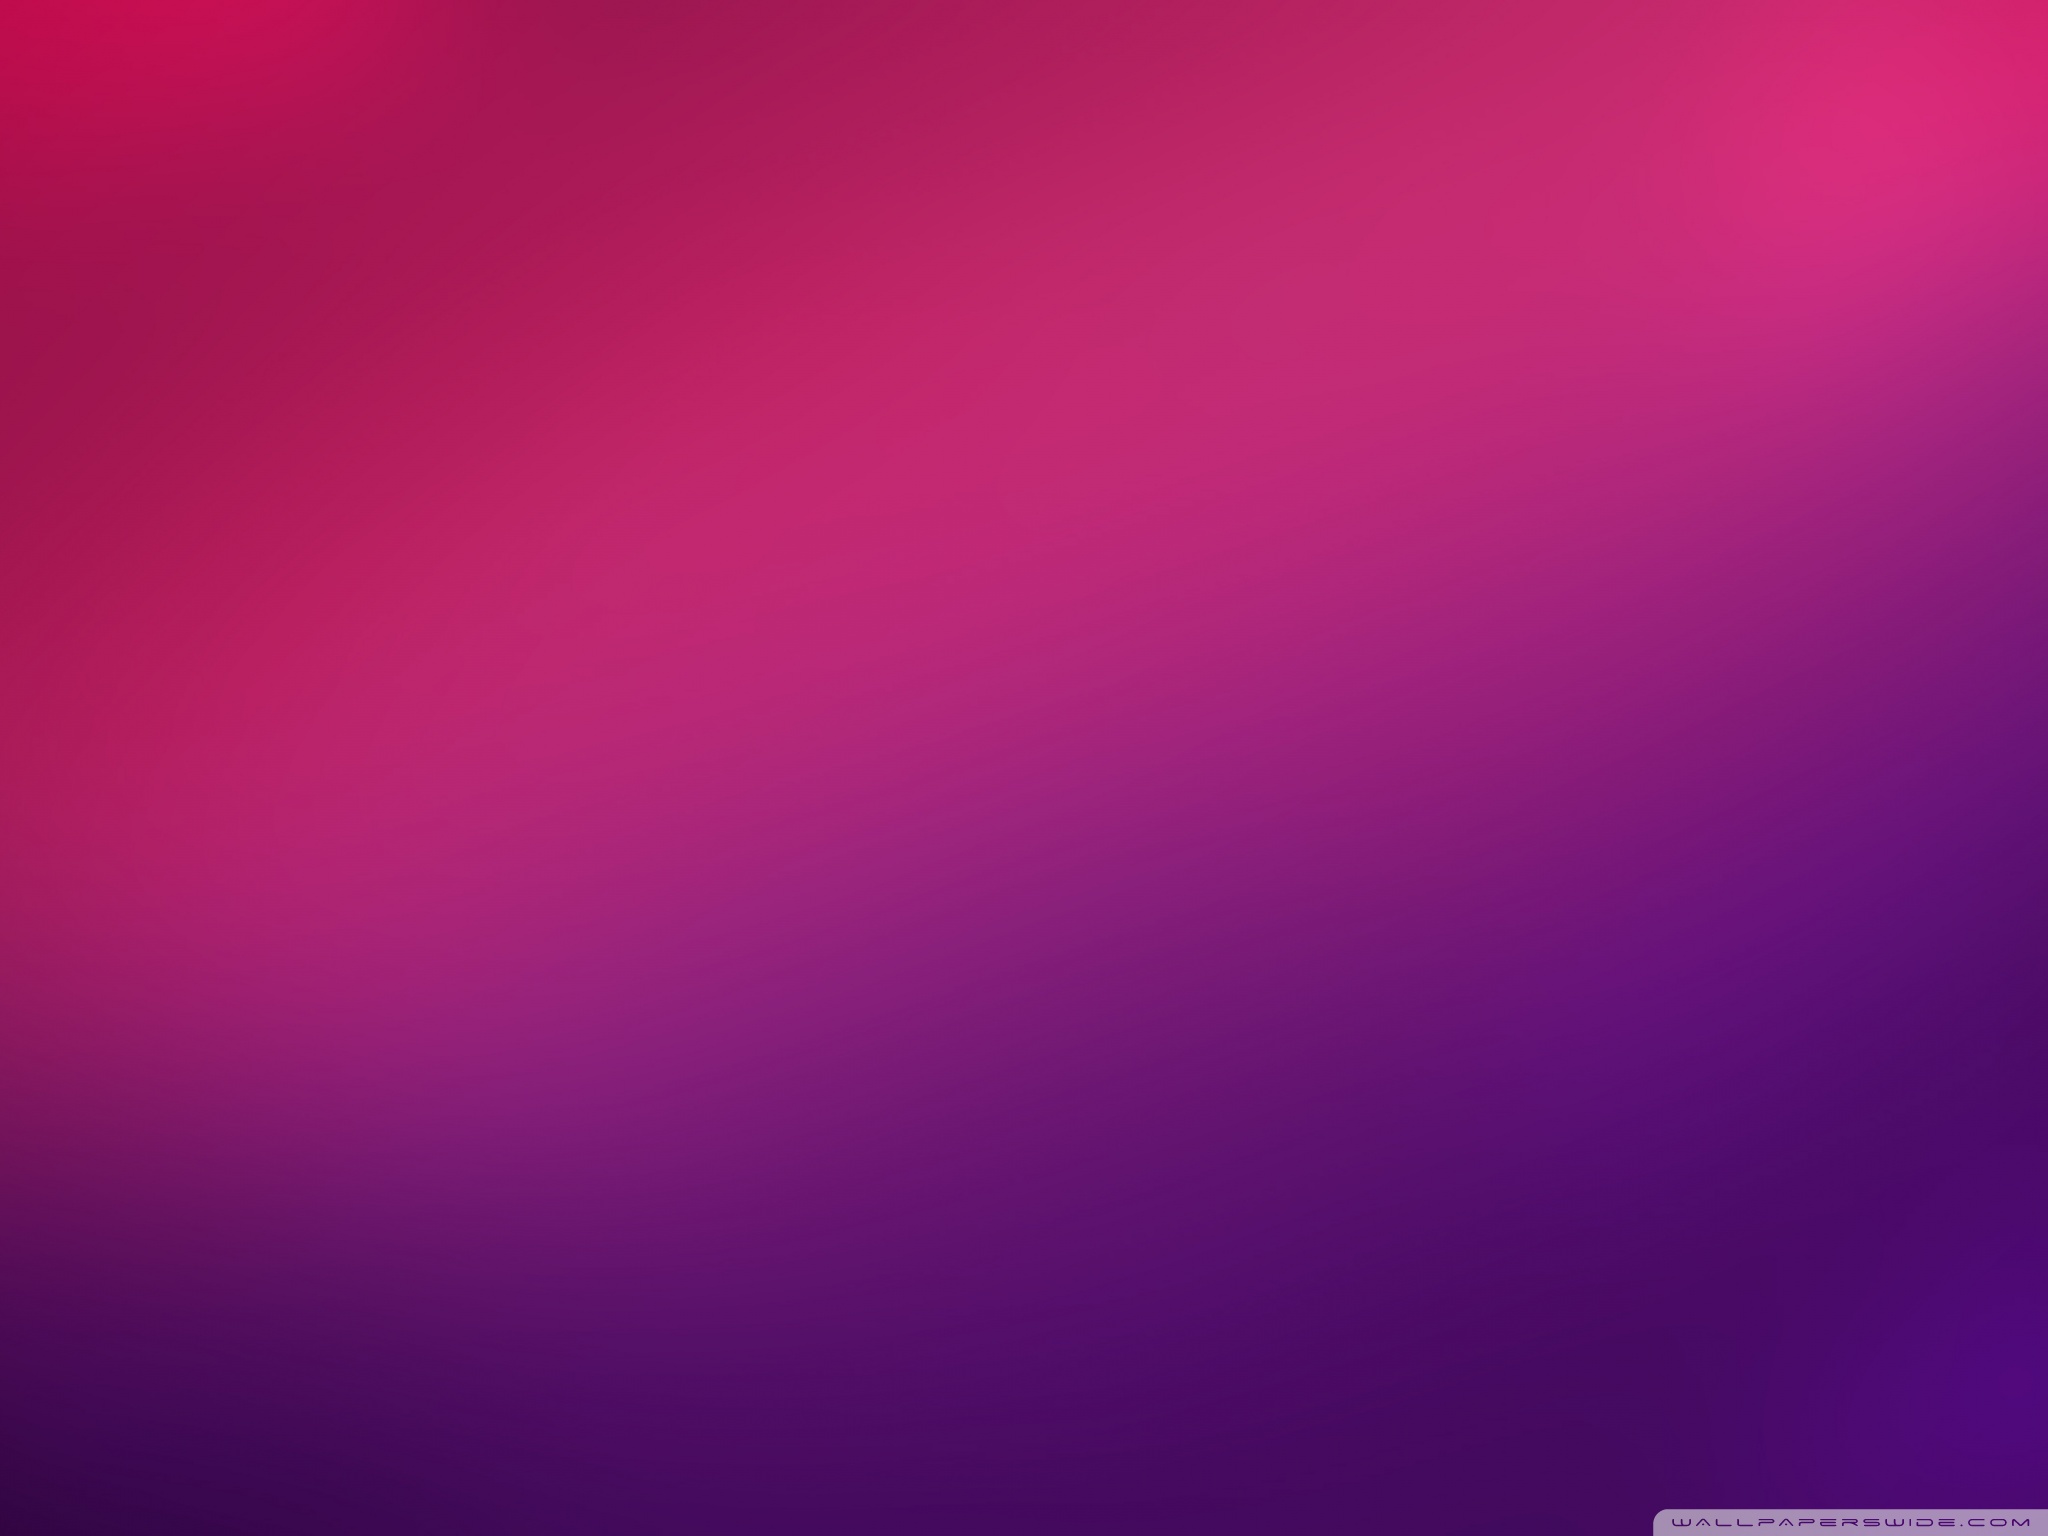 Minimalist Purple Ultra HD Desktop Background Wallpaper for 4K UHD TV, Tablet